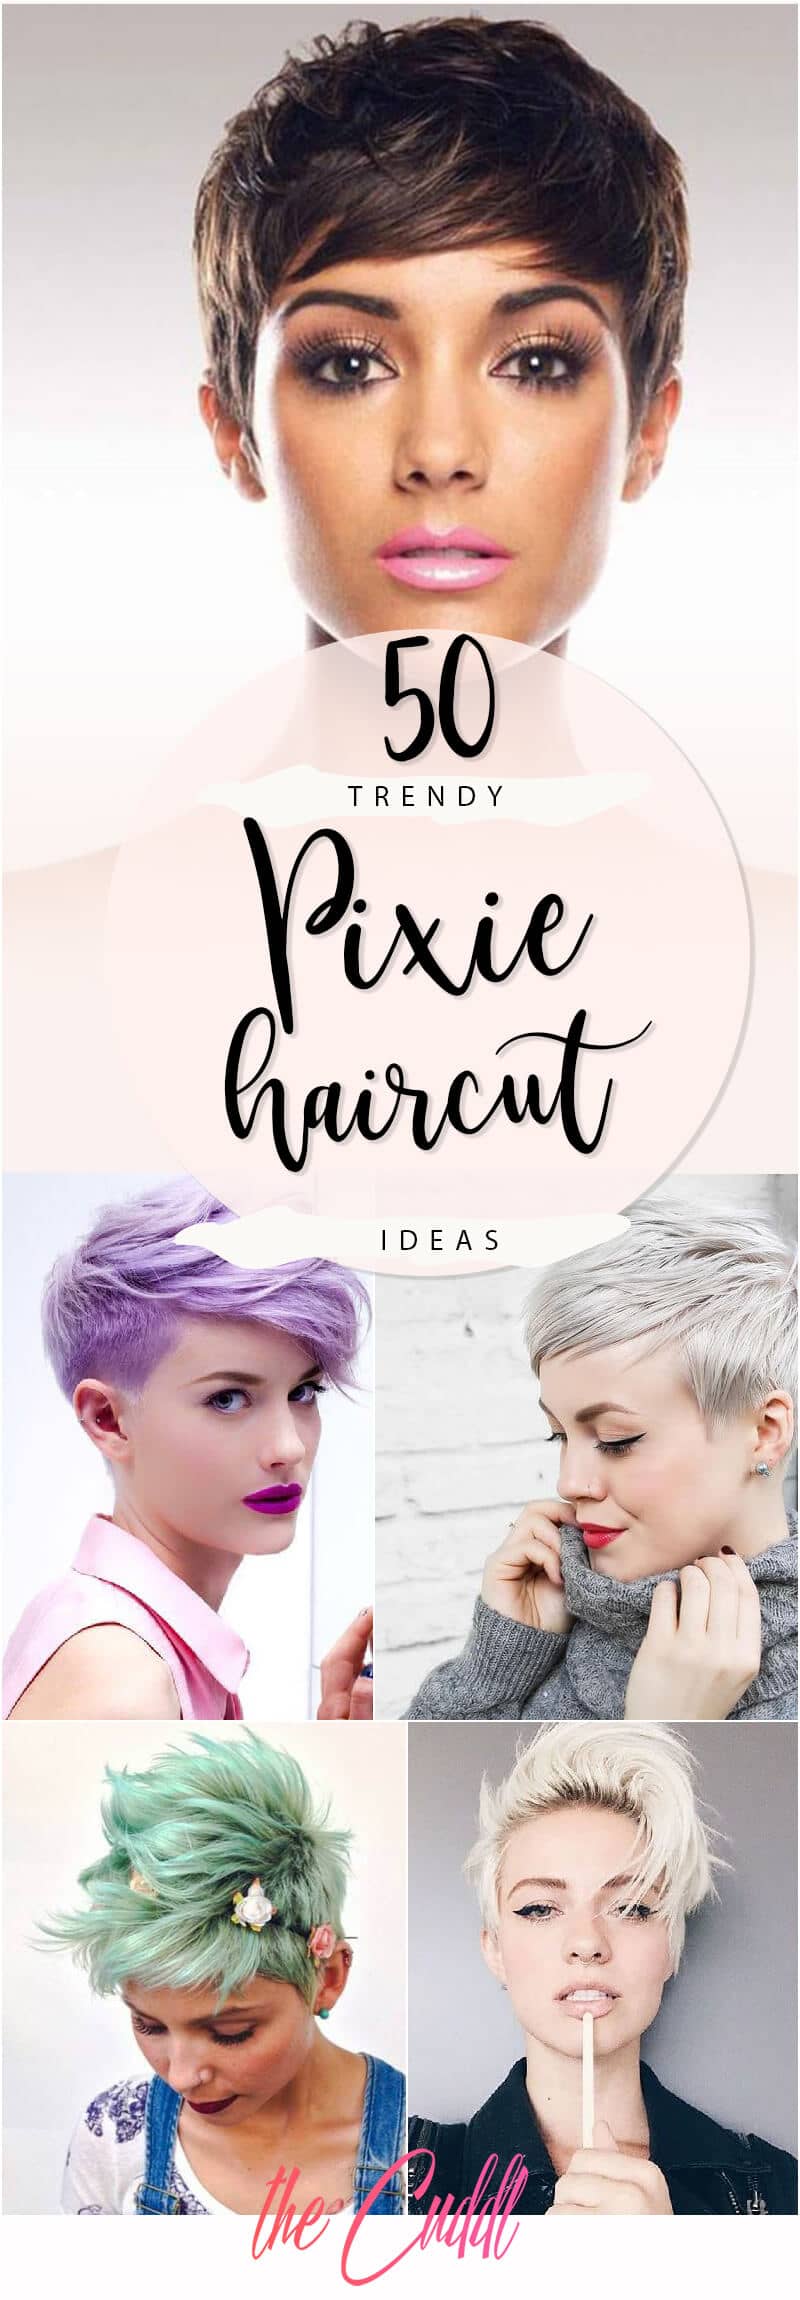 Pixie Cut Styling Ideas